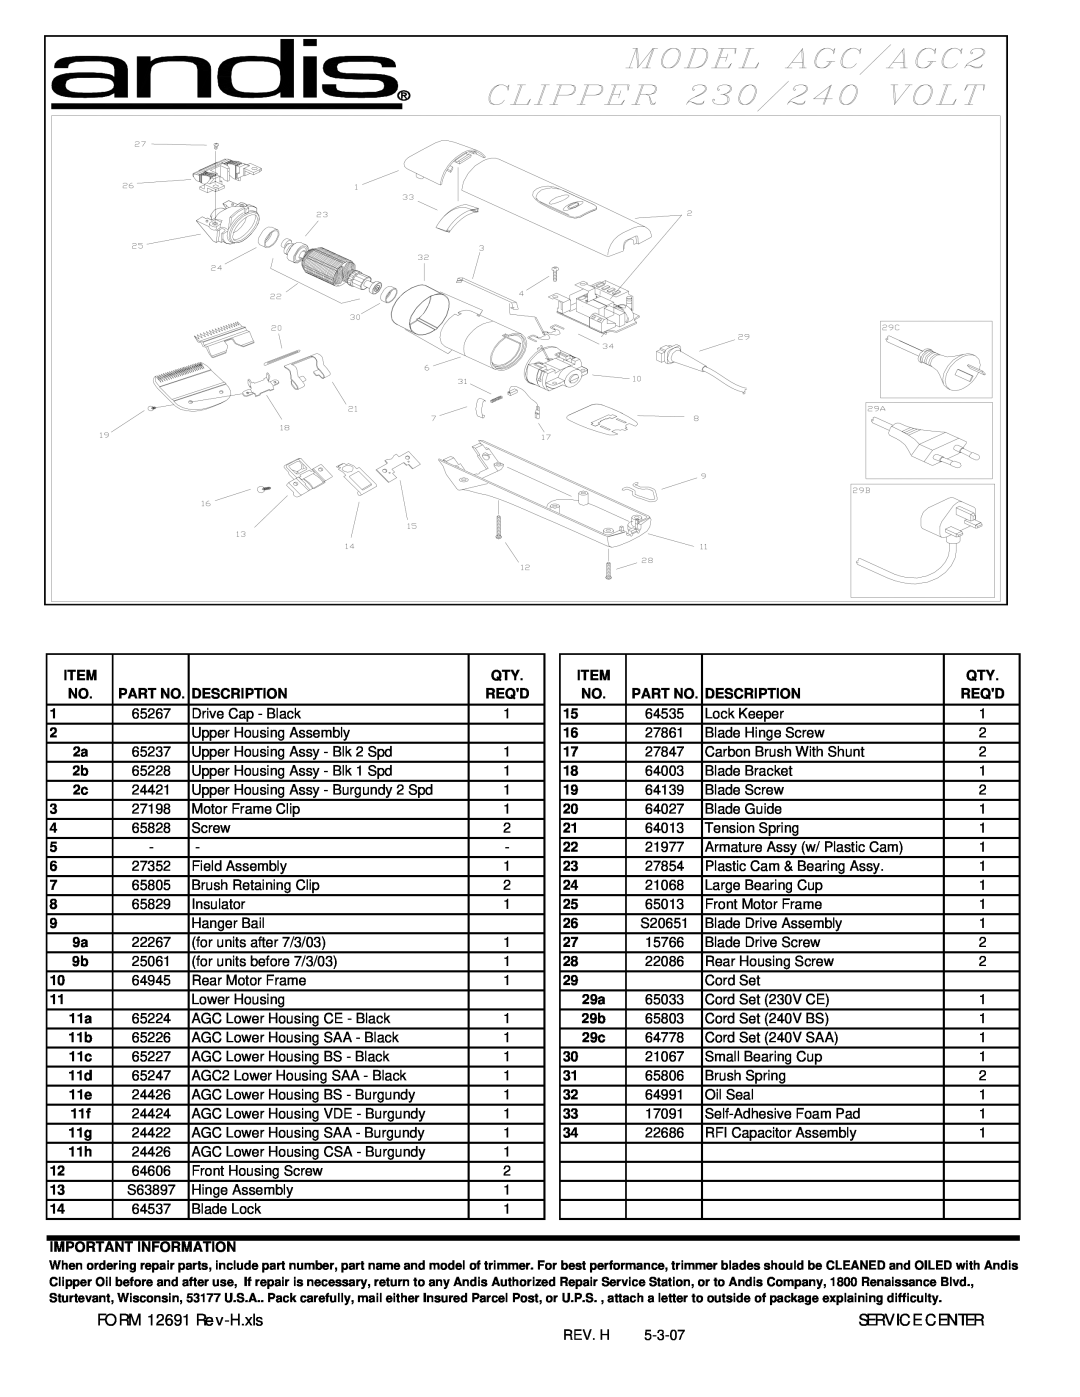 Andis Company AGC/AGC2 manual FORM 12691 Rev-H.xls, Service Center 